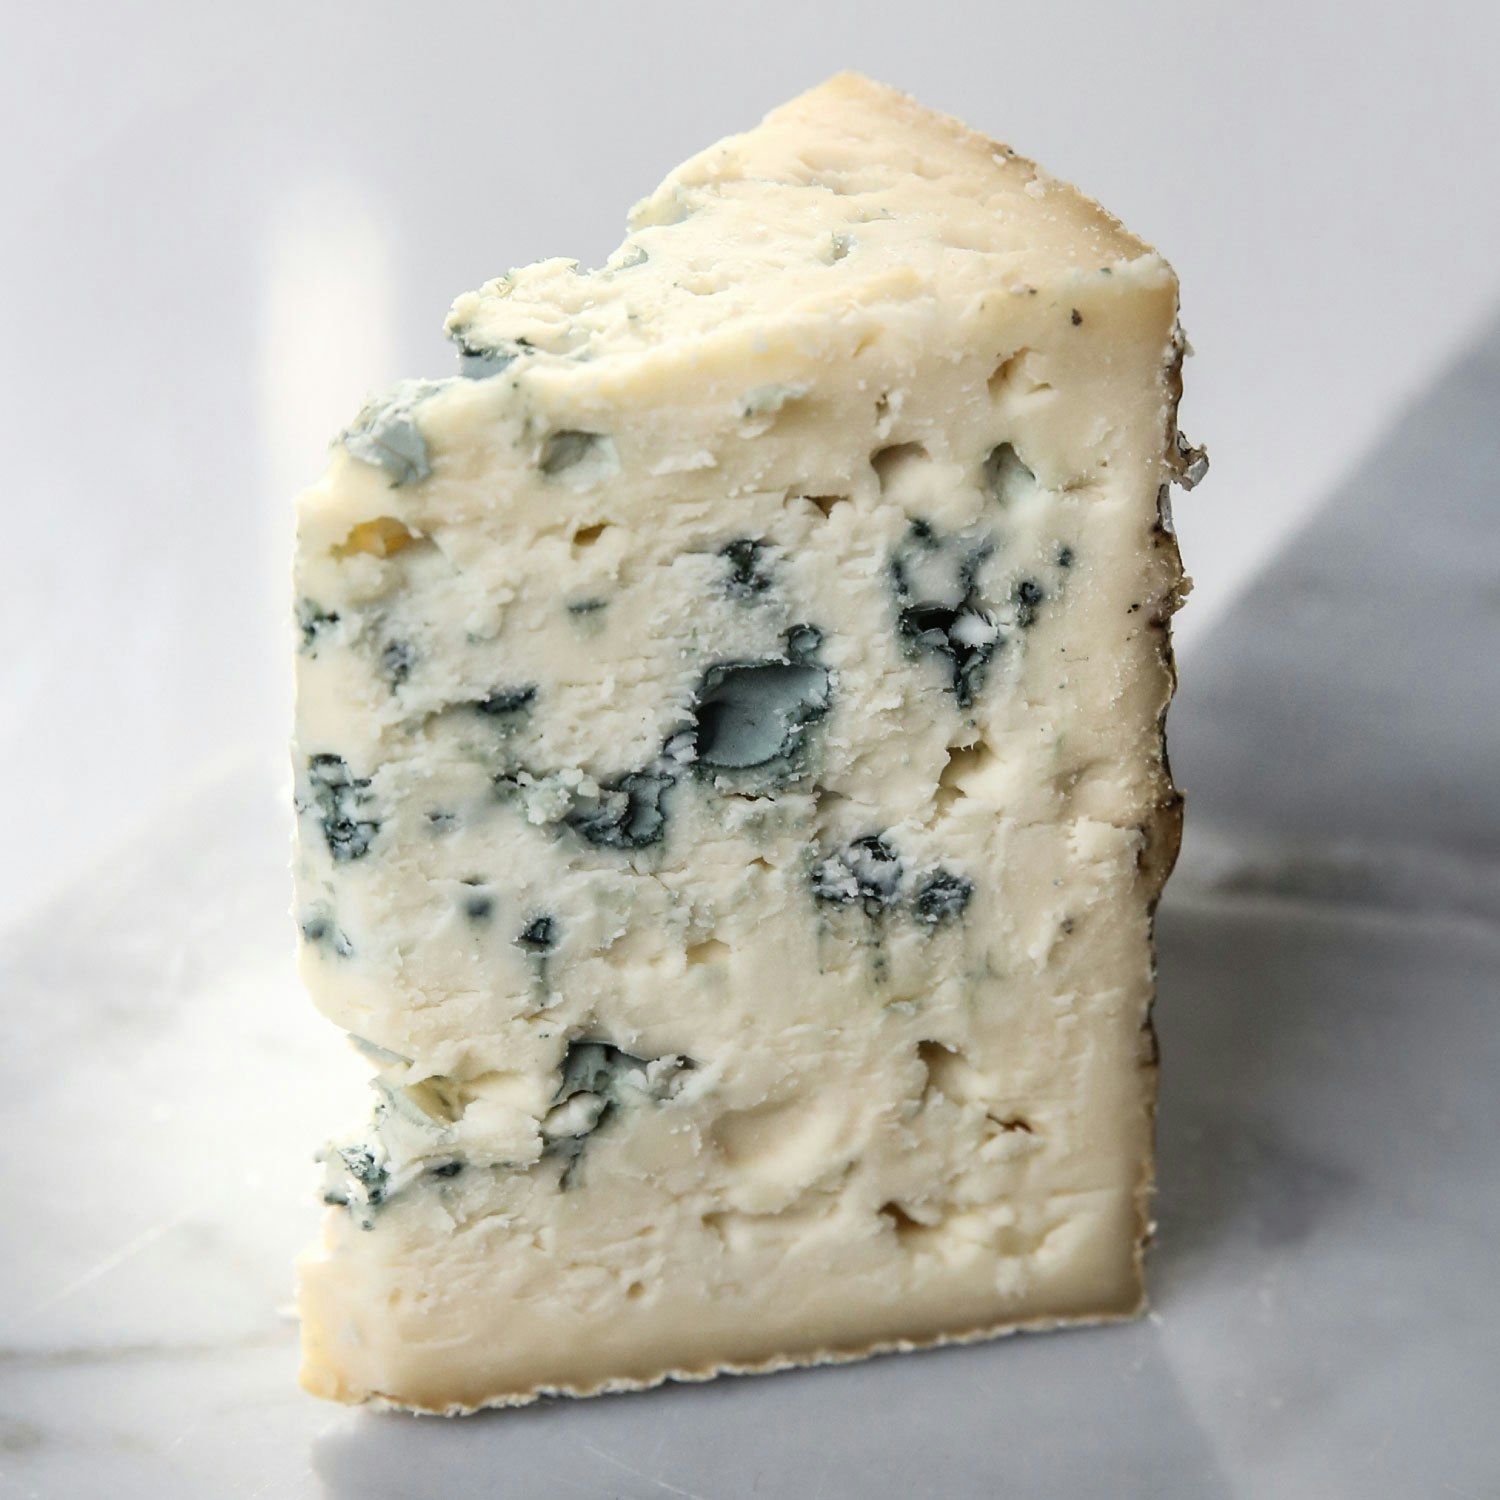 jasper hill farm bayley hazen blue cheese